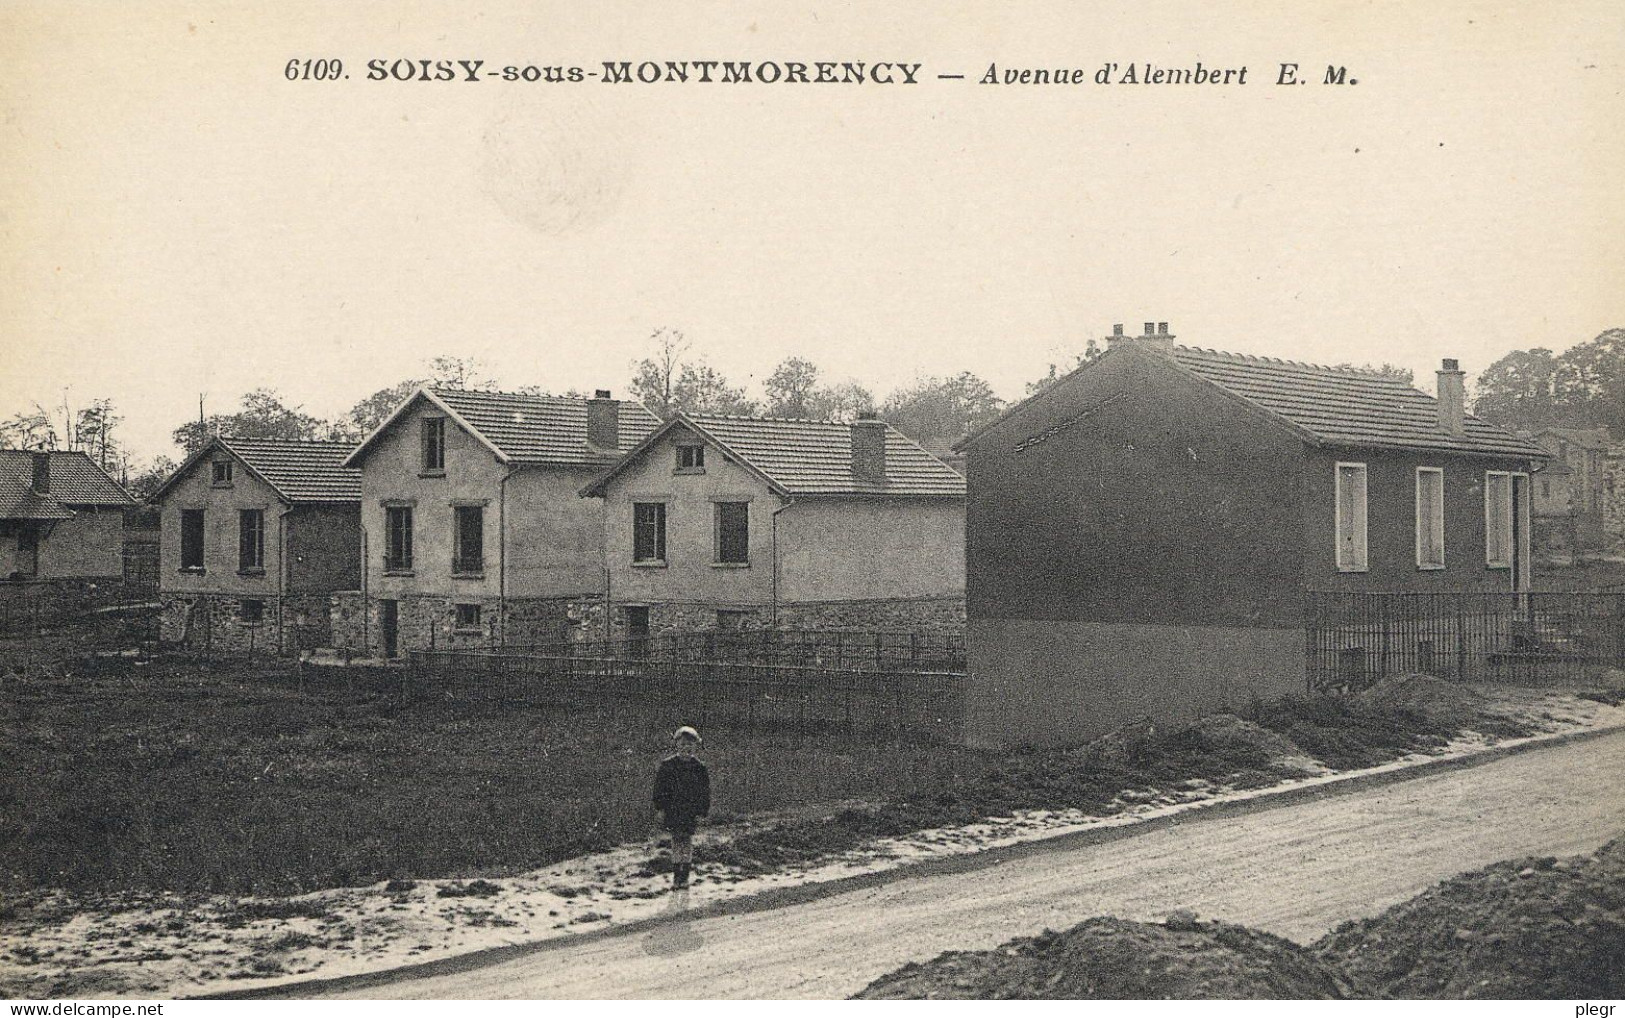 95598 01 01 - SOISY SOUS MONTMORENCY - AVENUE D'ALEMBERT - Soisy-sous-Montmorency